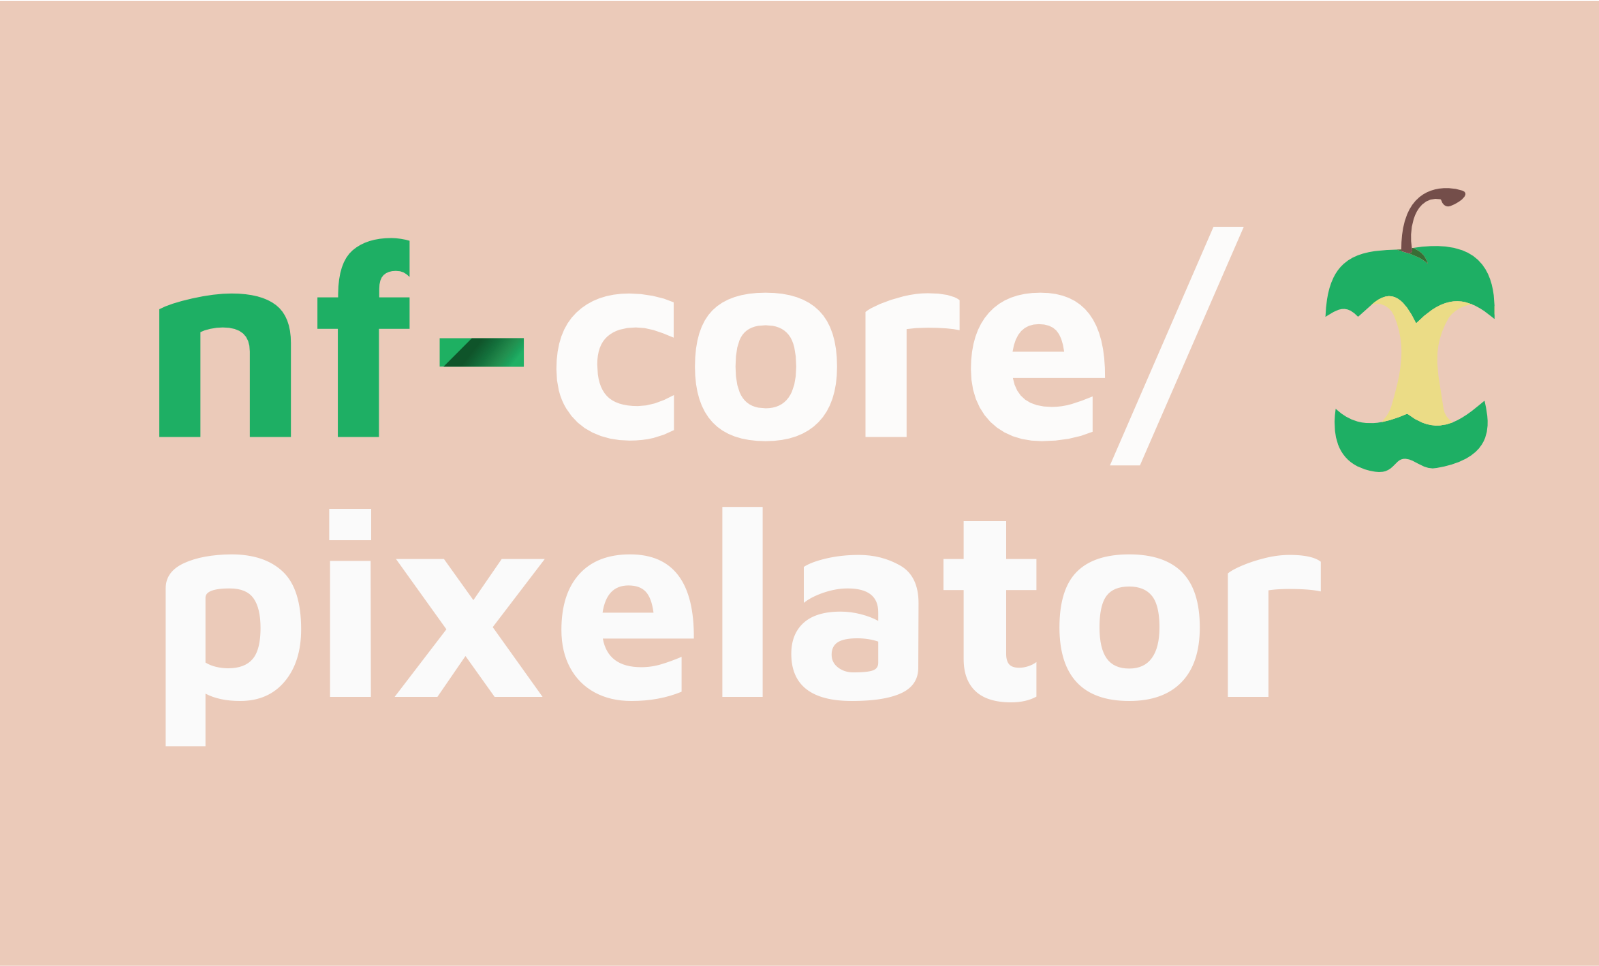 nf-core/pixelator